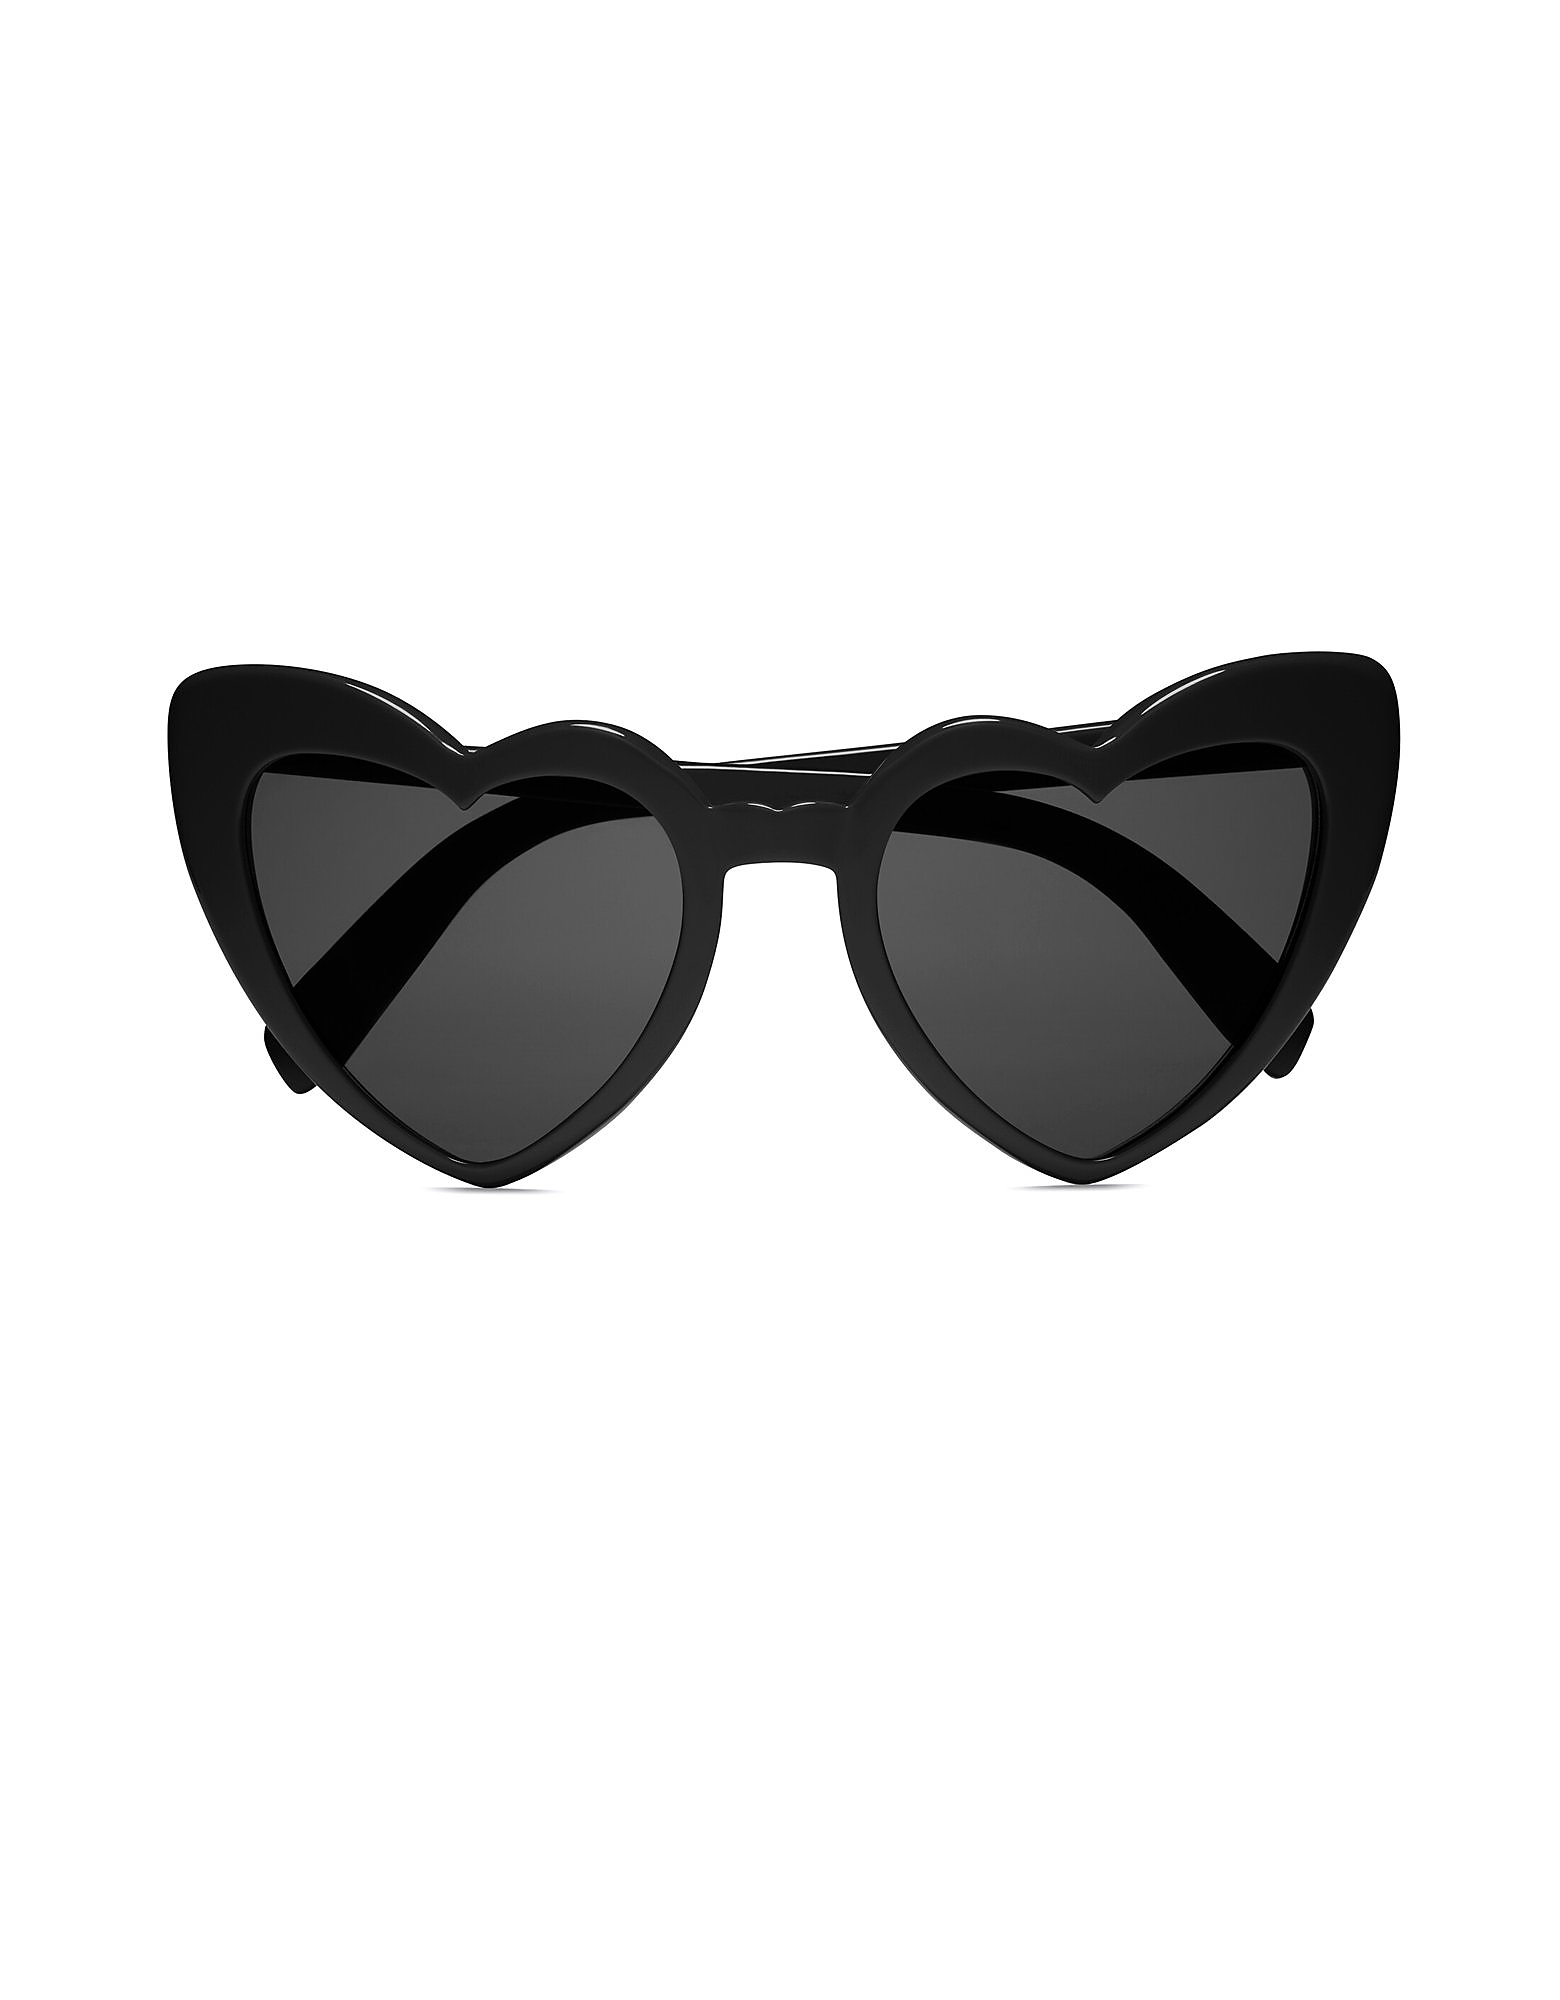 Saint Laurent Sunglasses New Wave SL 181 LouLou Heart Sunglasses